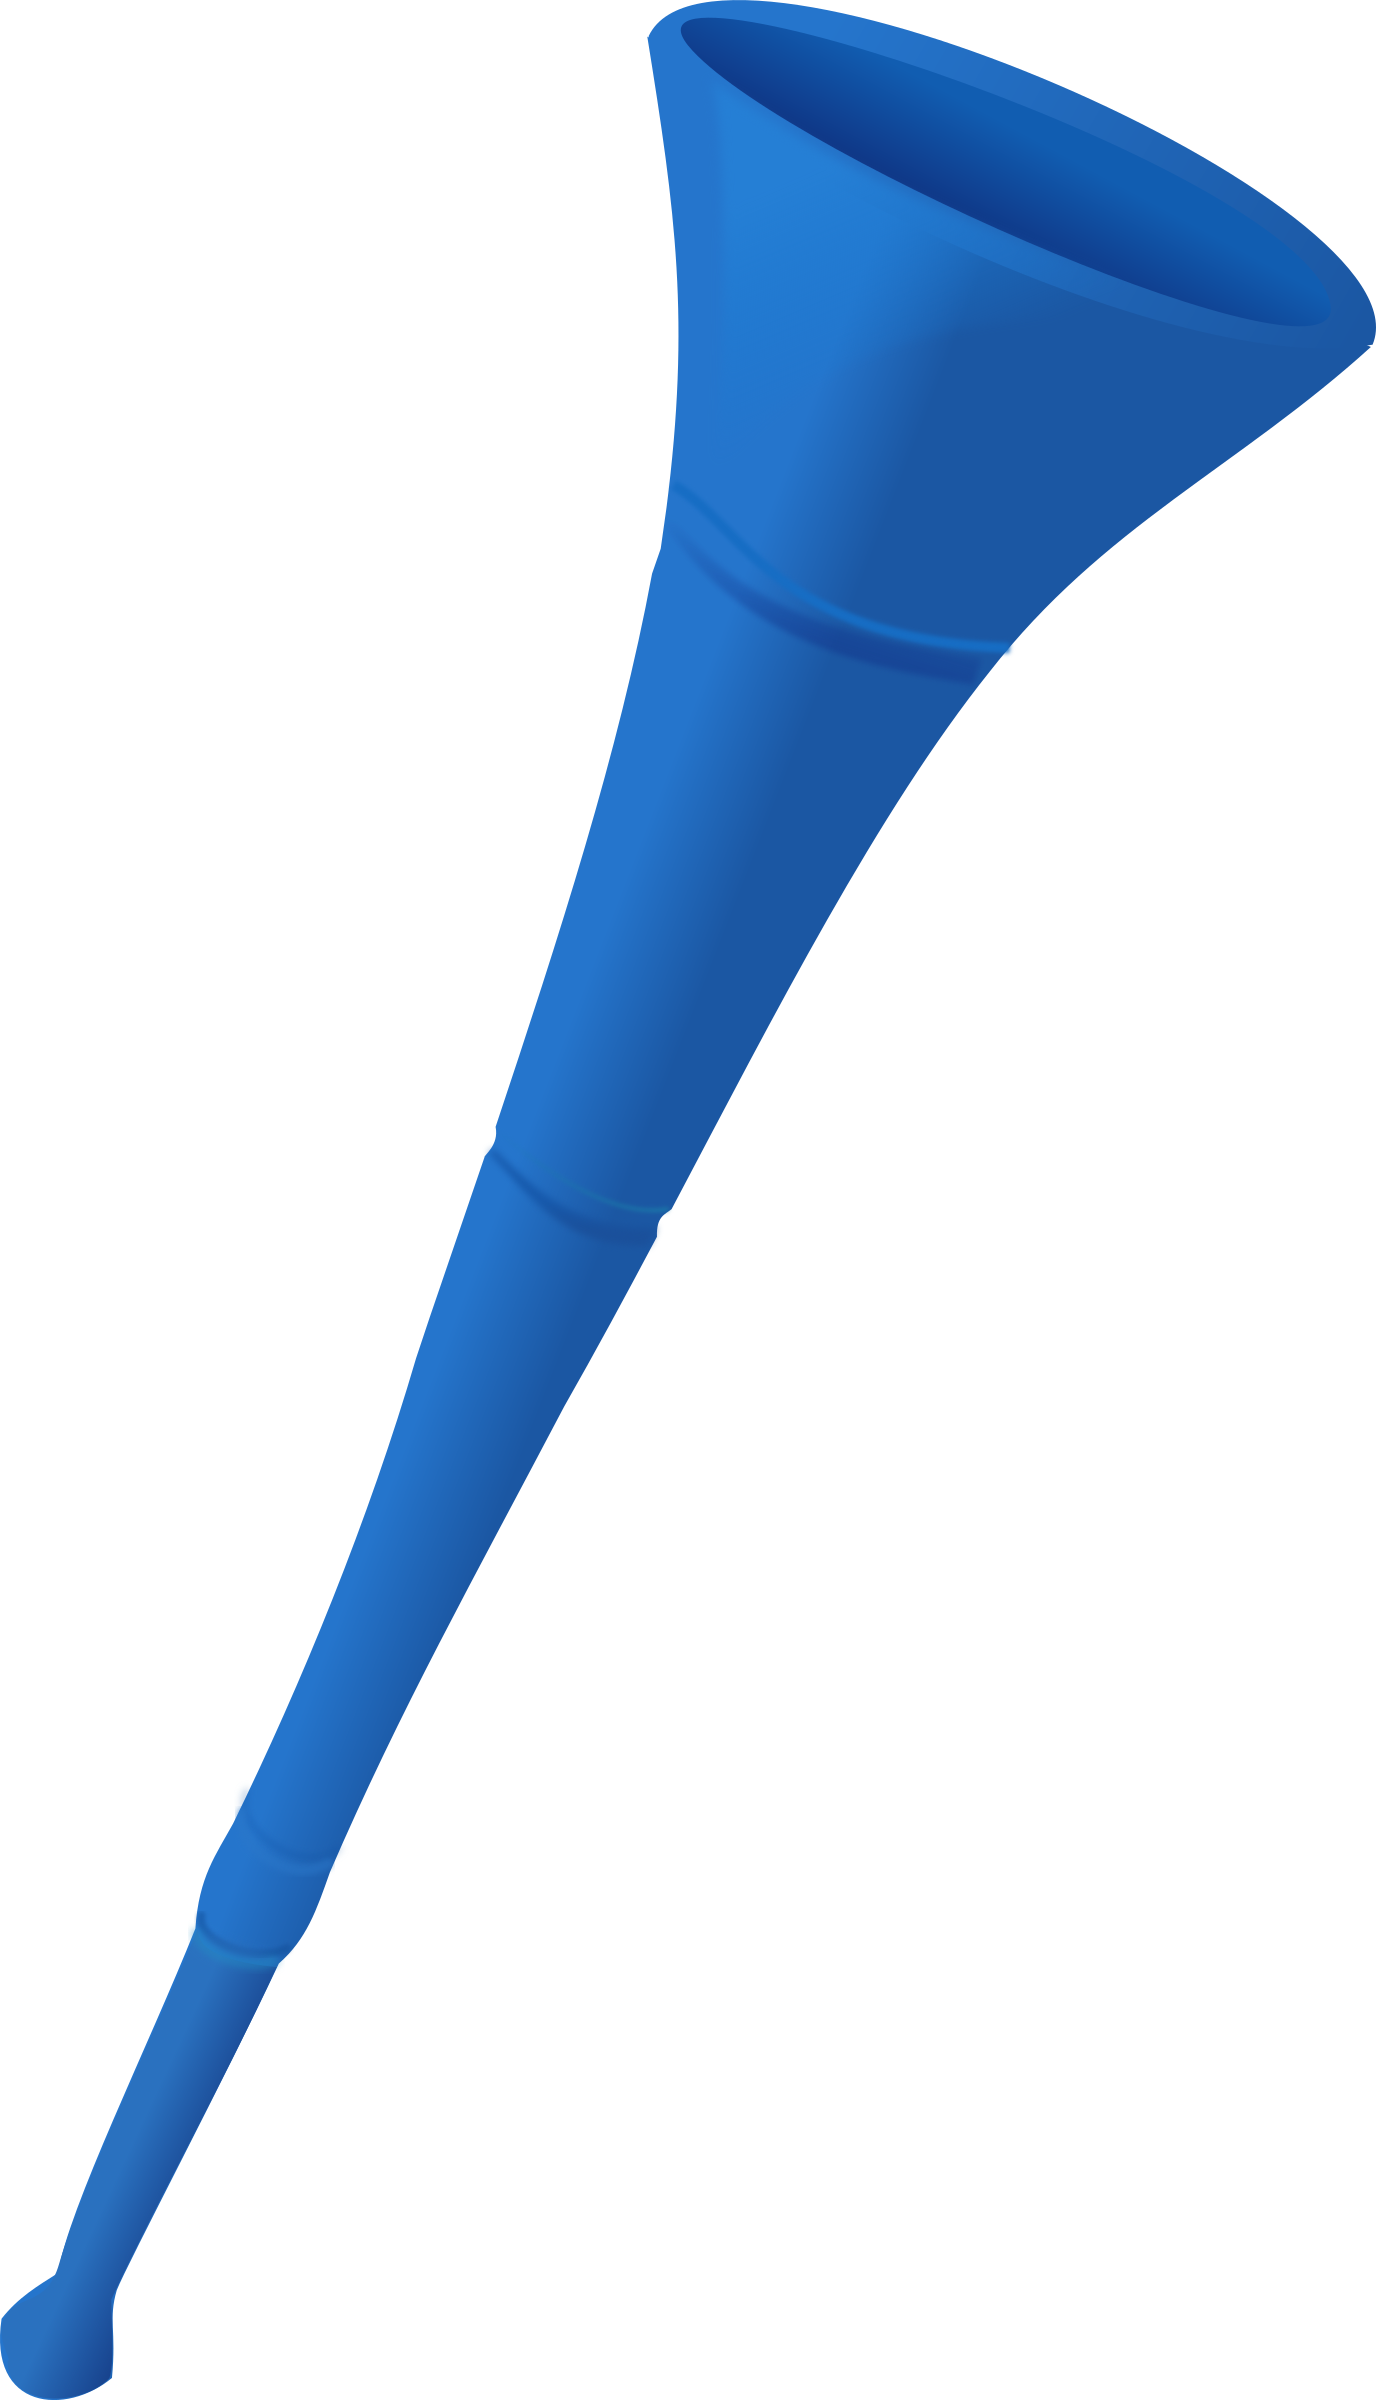 Horn clipart disturbance. Blue vuvuzela big image